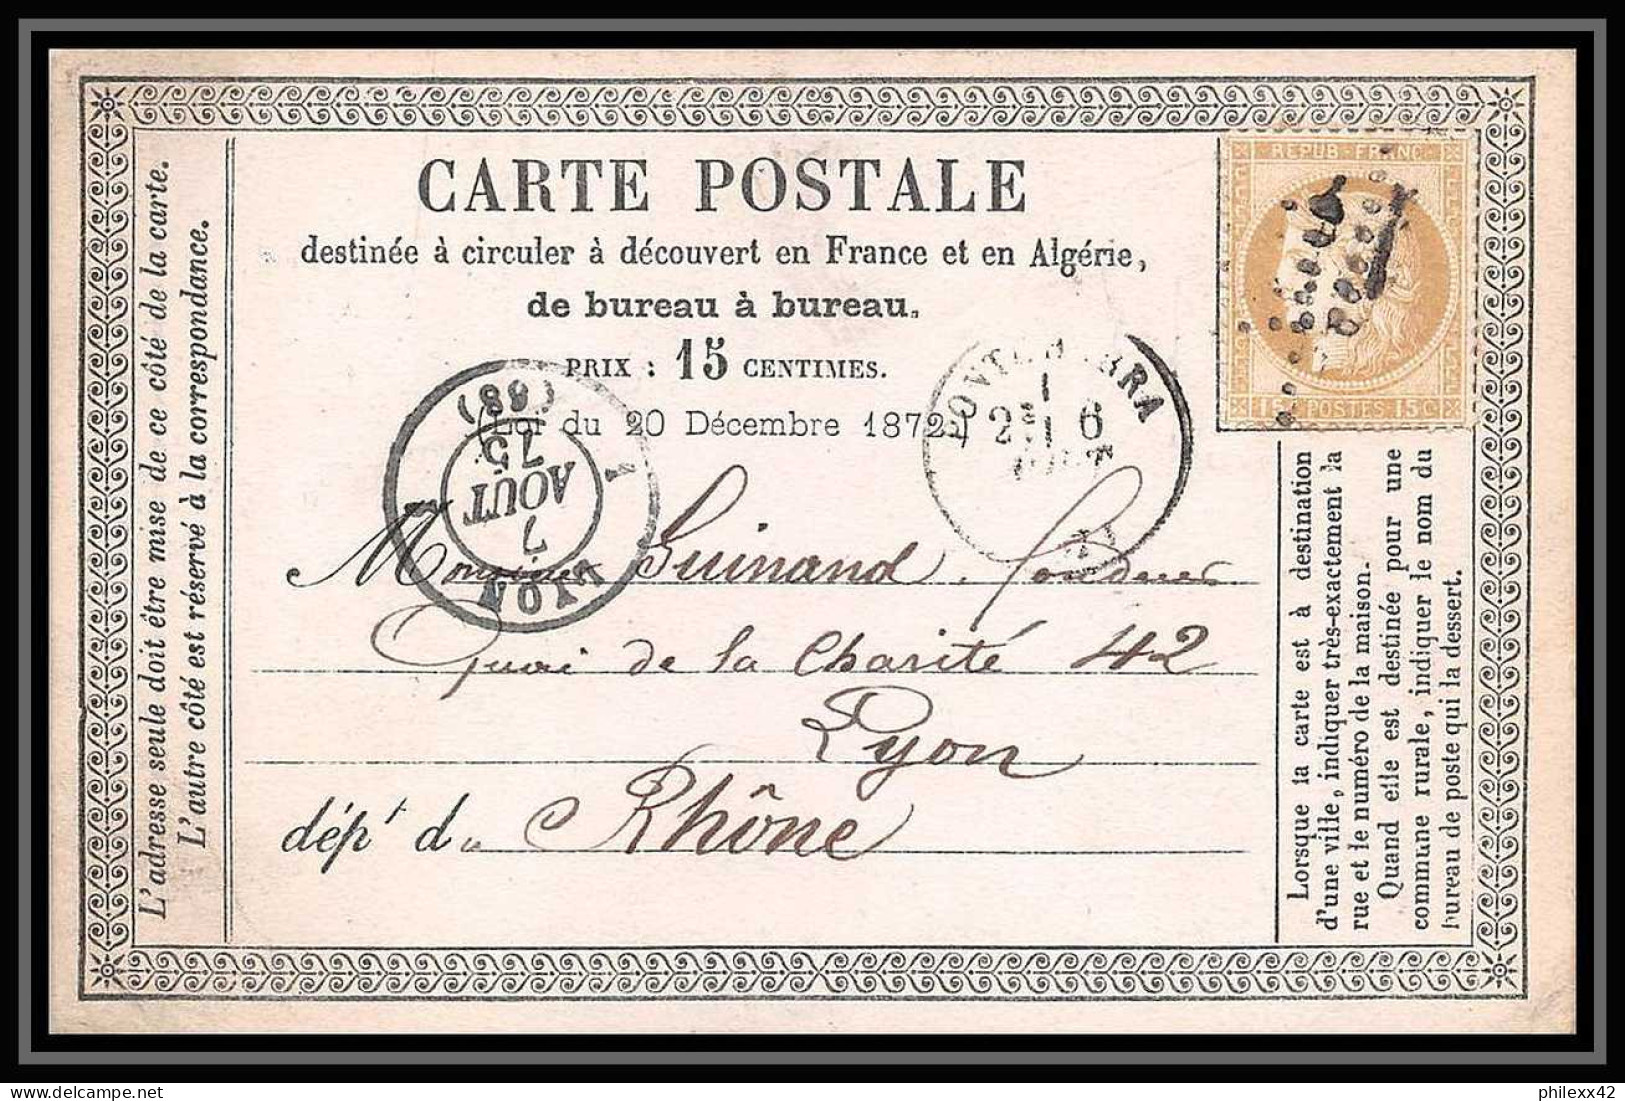 1320 Carte Postale (postcard) Précurseur N°55 GC 1966 Pontcharra IIsère 06/08/75 Cères Pour Lyon Rhone - Cartoline Precursori